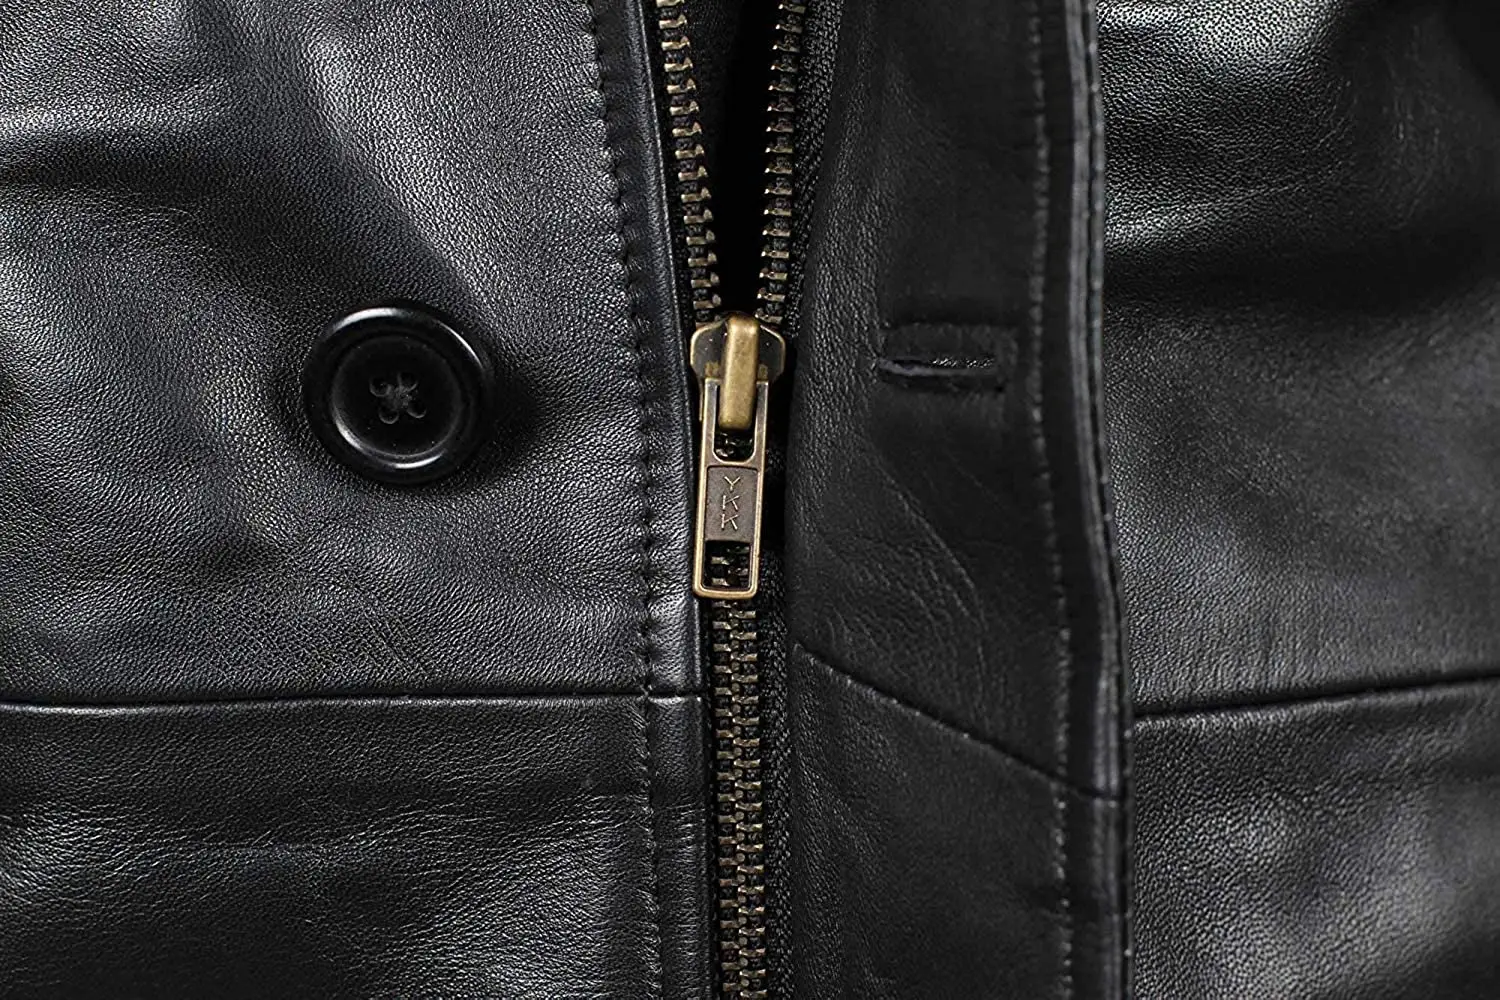 Men's 3/4 Length Black Leather Jacket - Winter Leather Coat